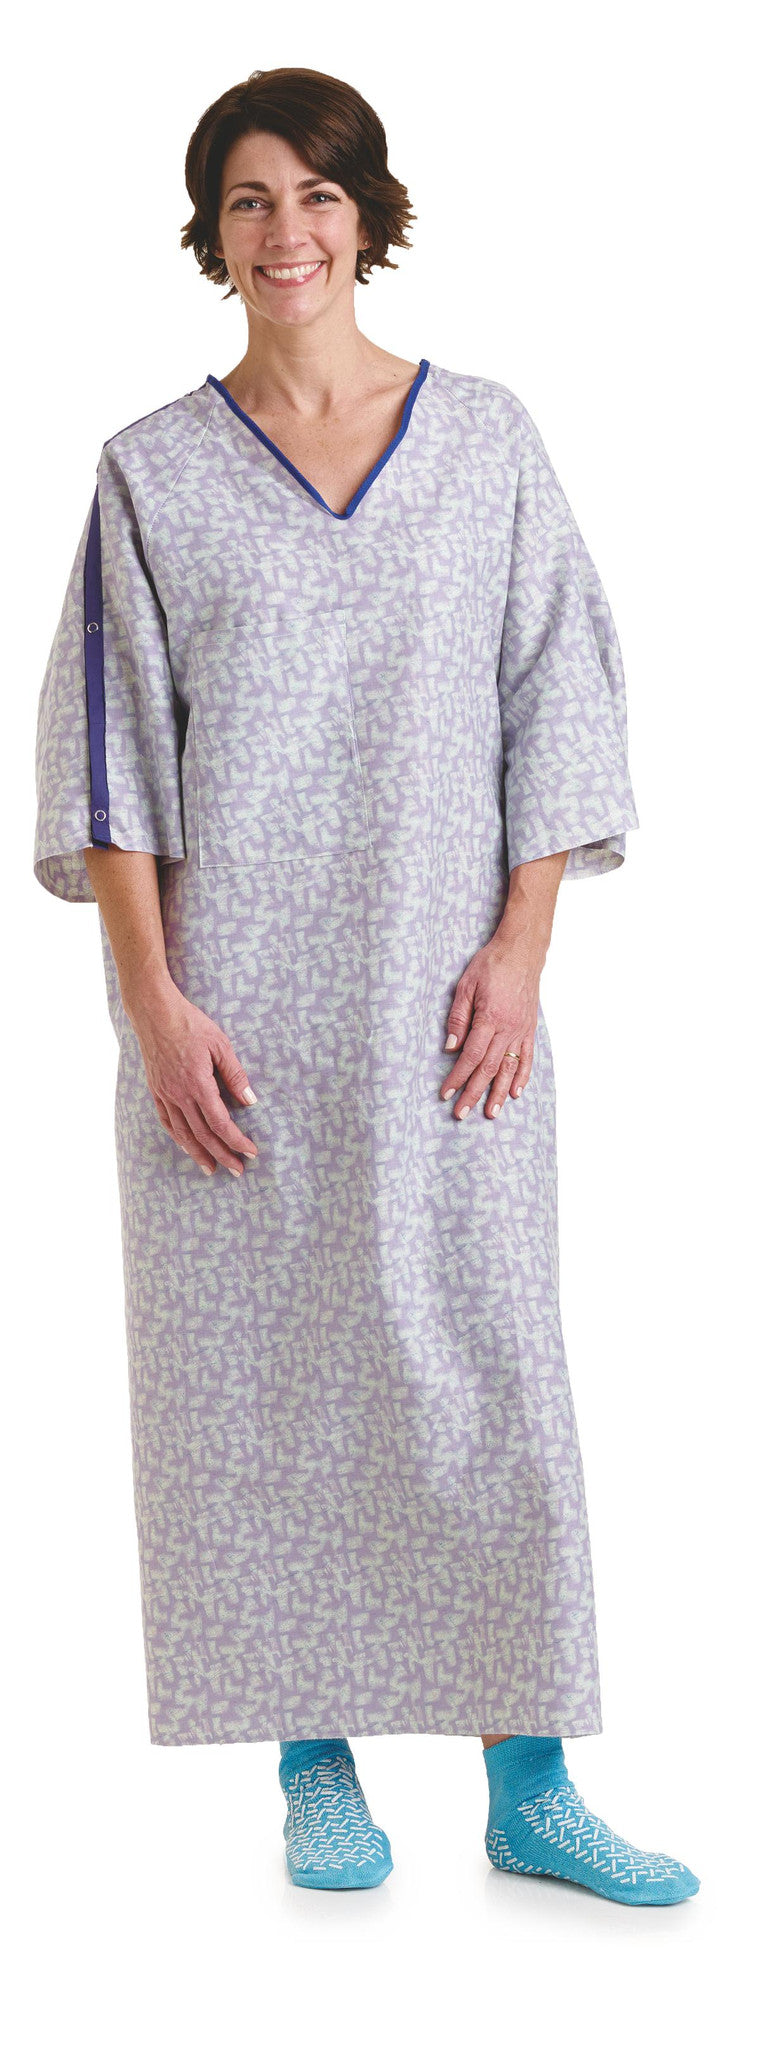 Plus Size Hospital Gown 3X - Geo Print Beige - Pack of 2 - Walmart.com